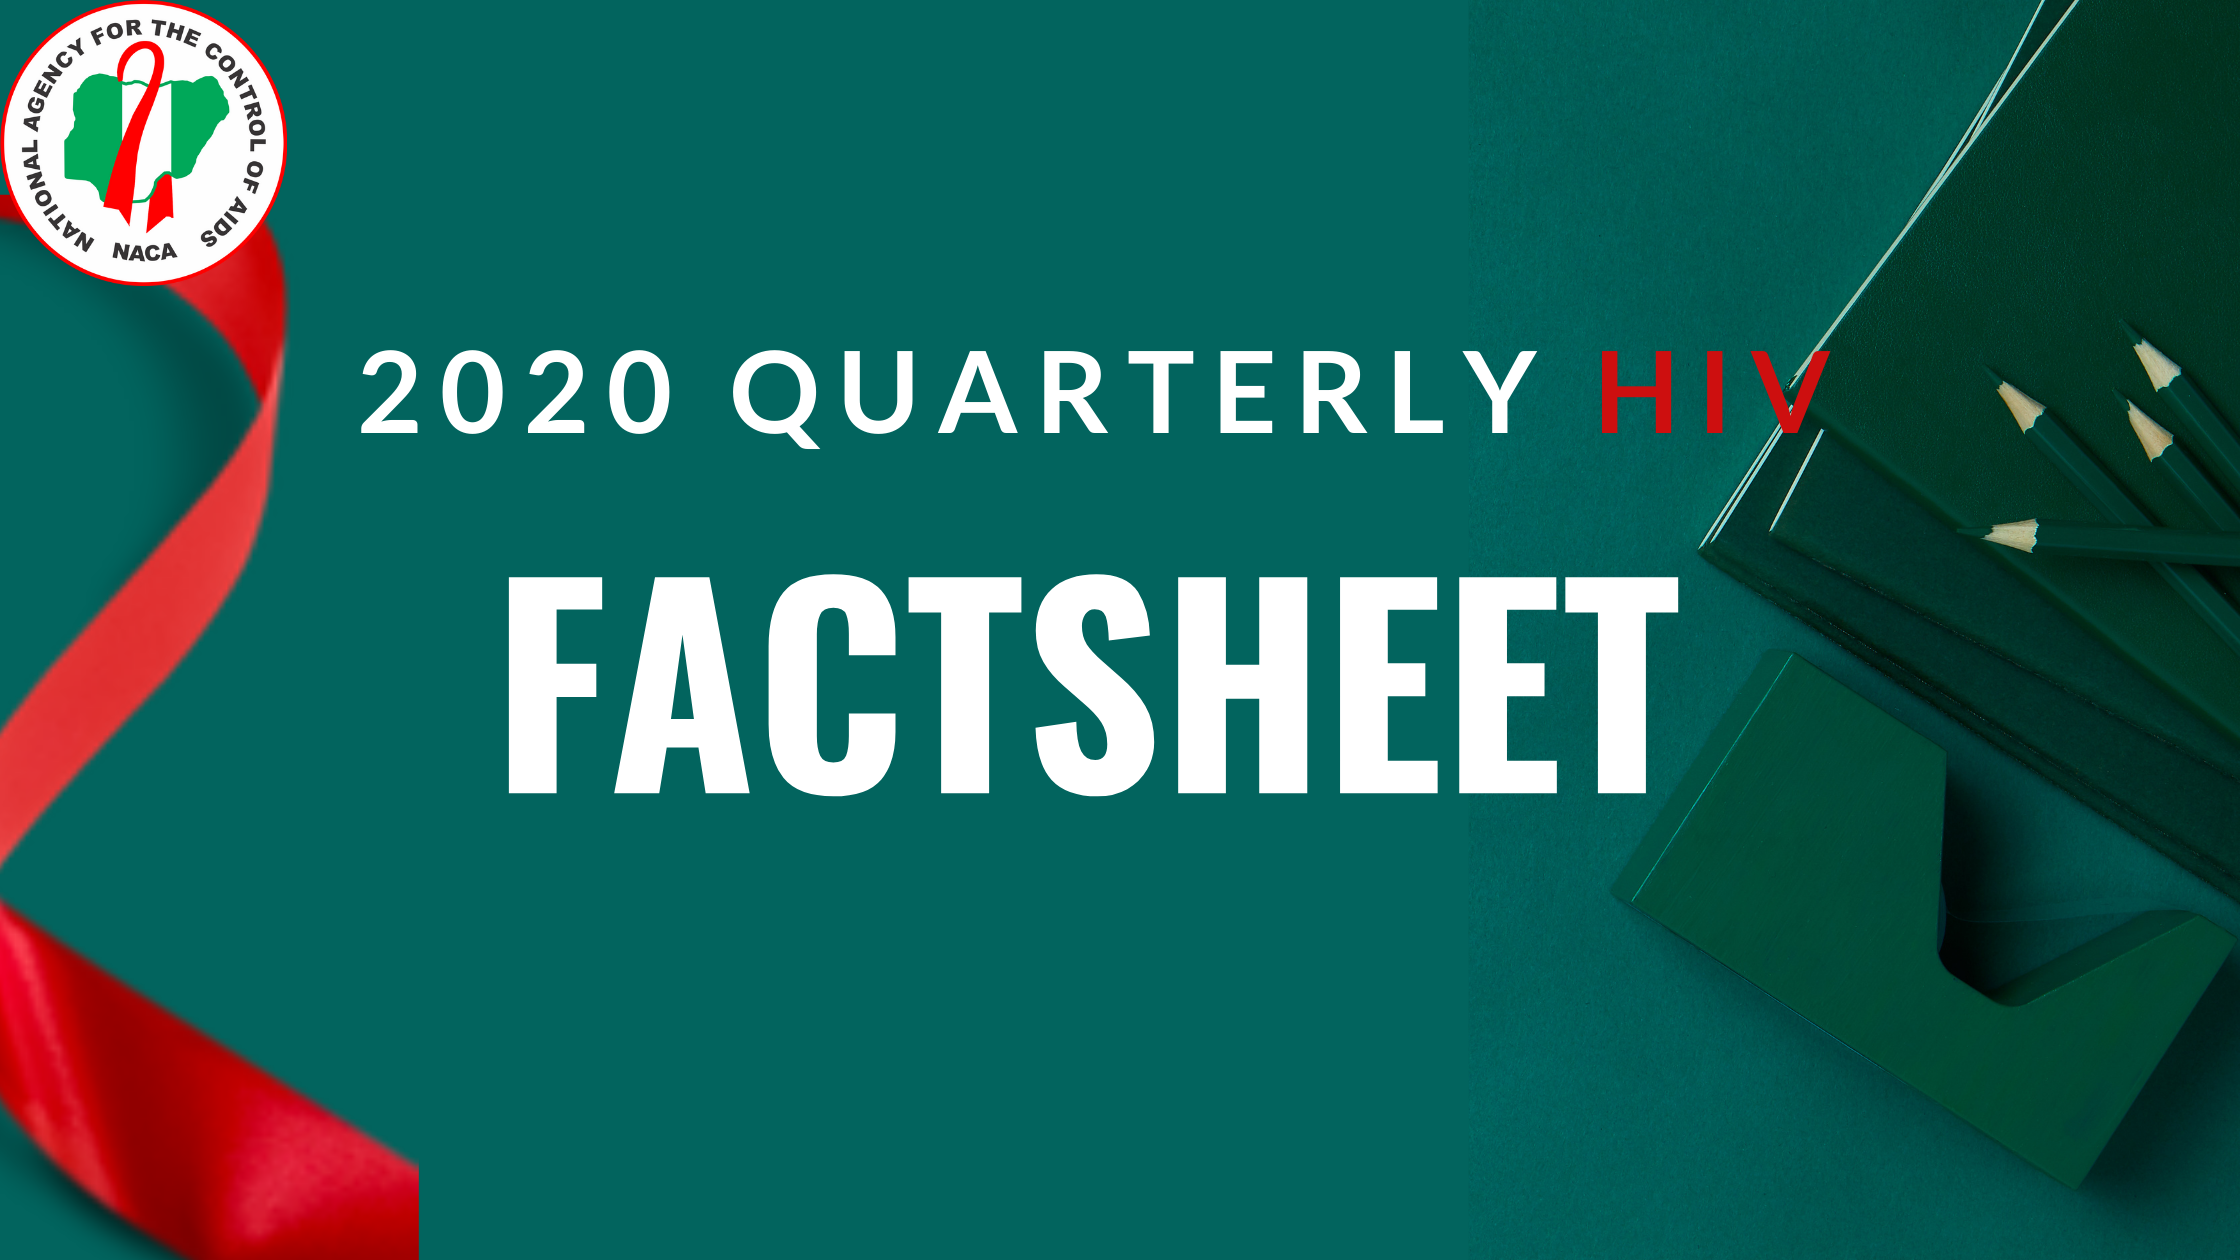 2020 QUARTERLY HIV FACTSHEET (VOL 1)